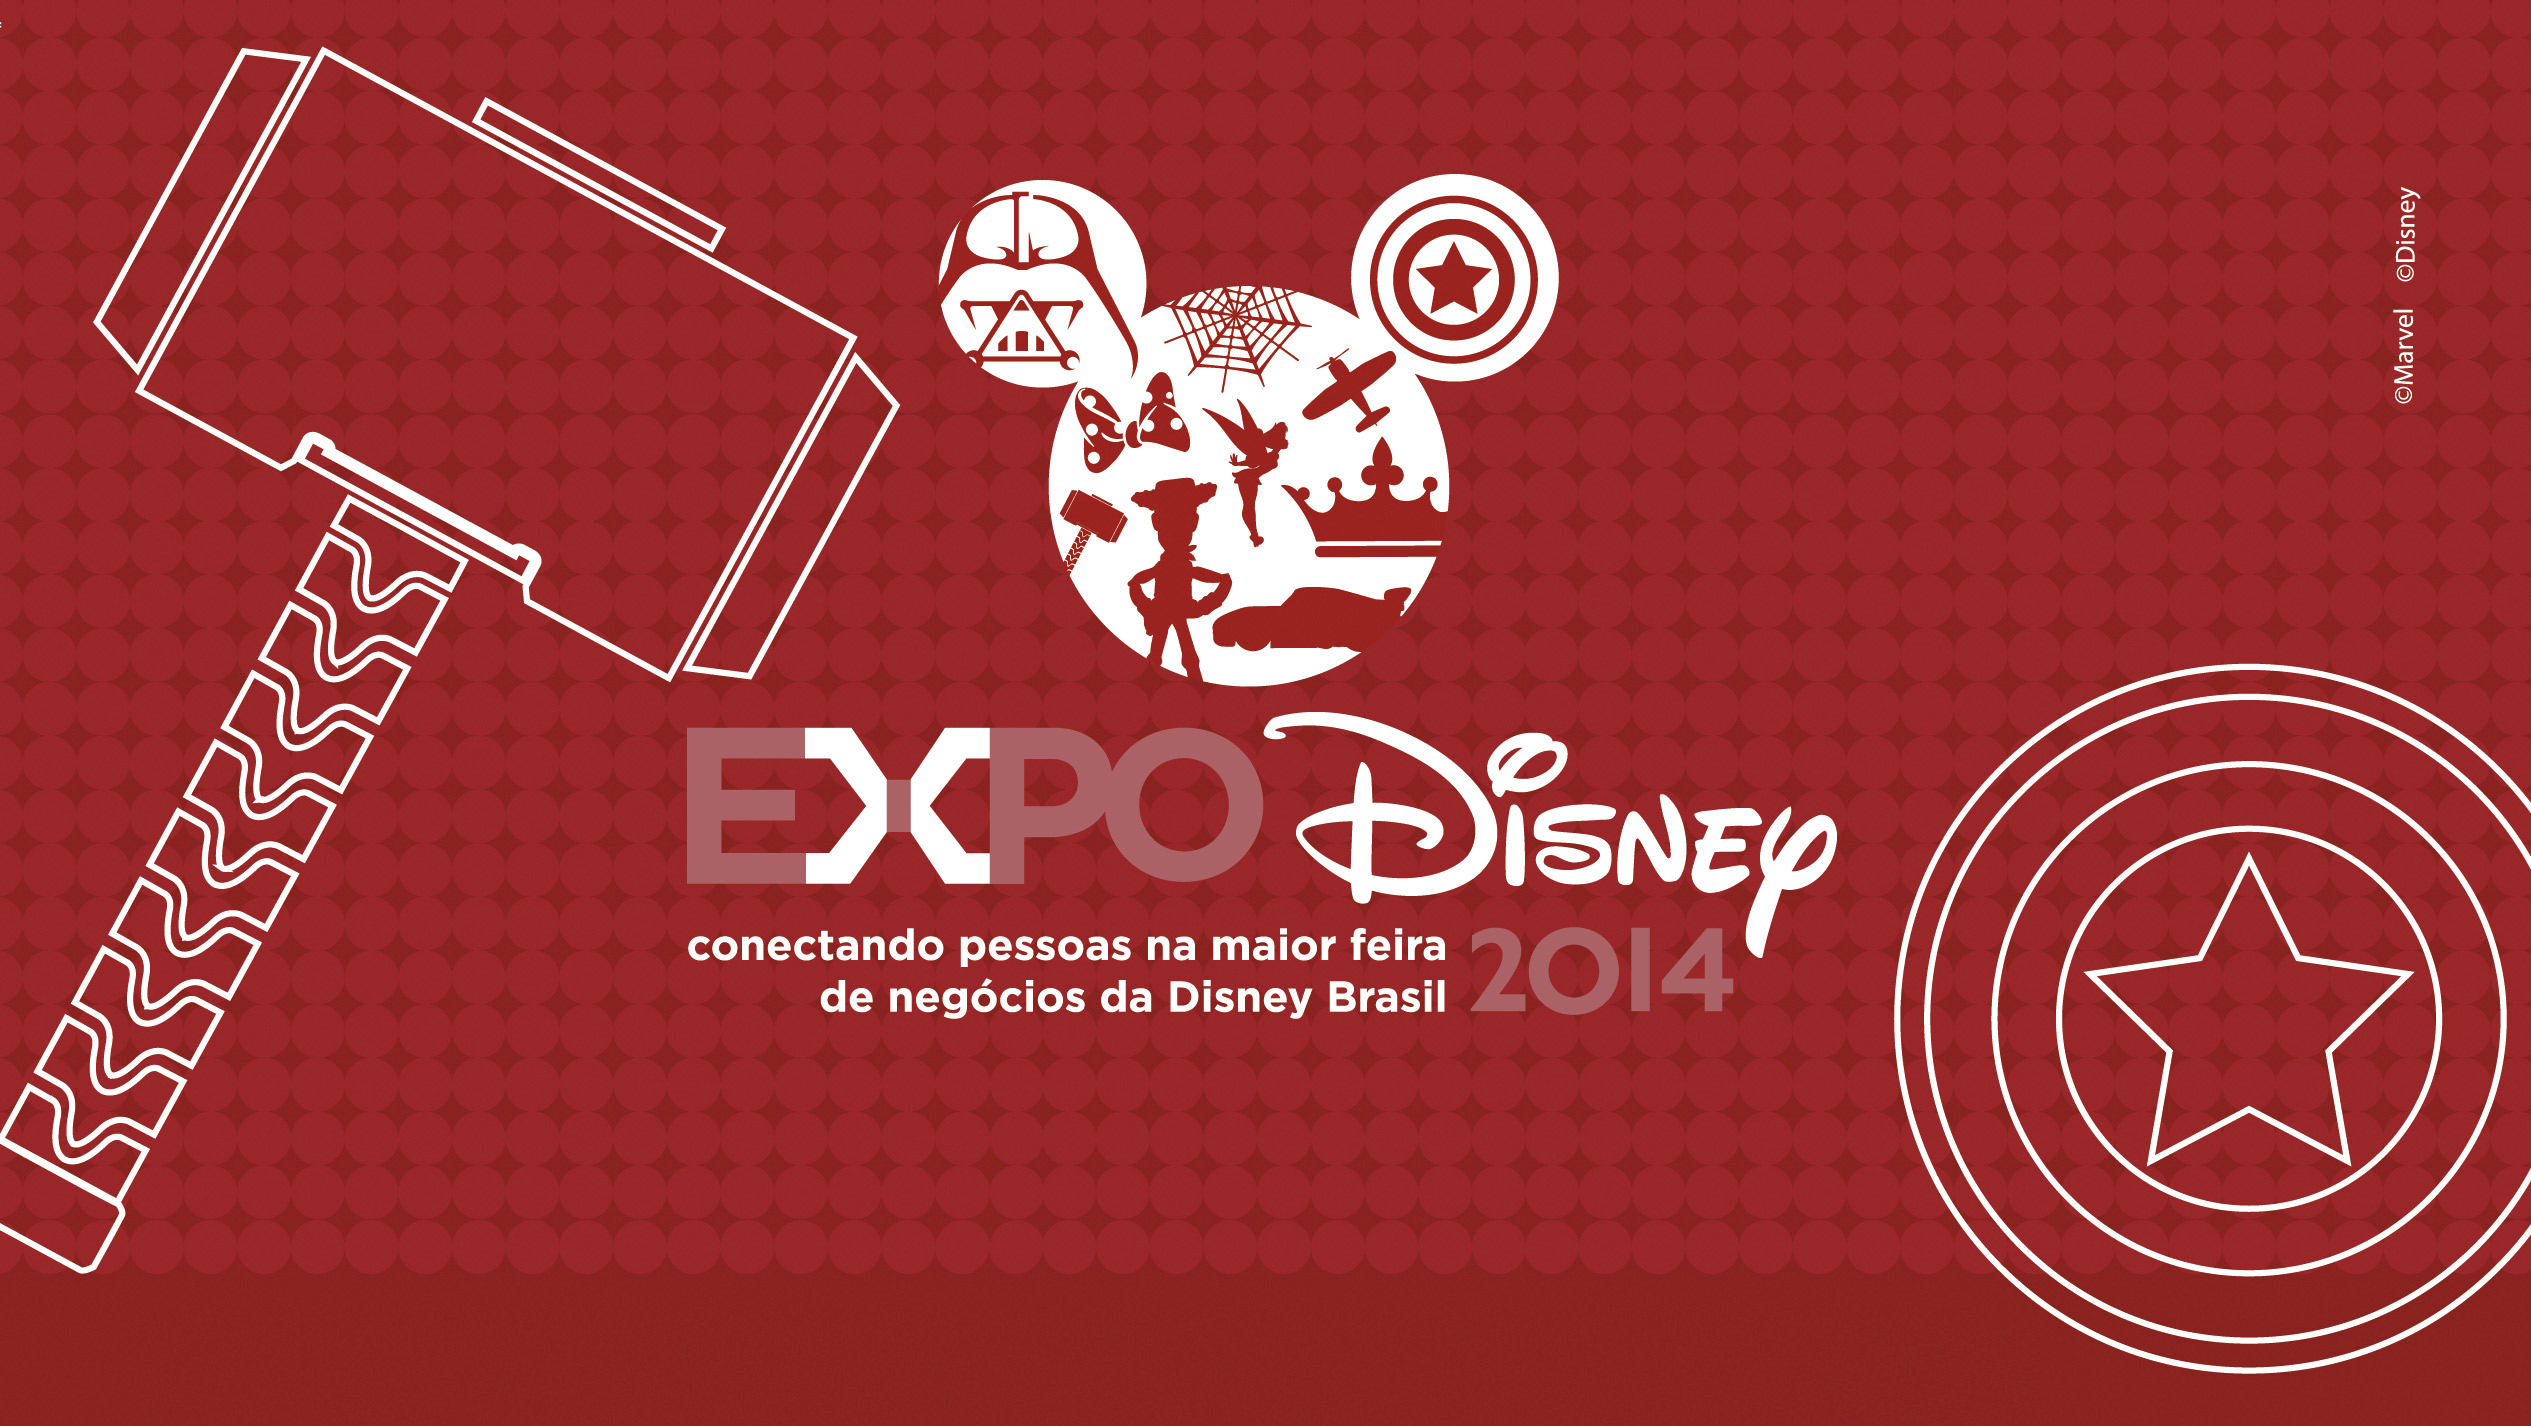 Expo Disney 2014 – Fazer Cadastro Online